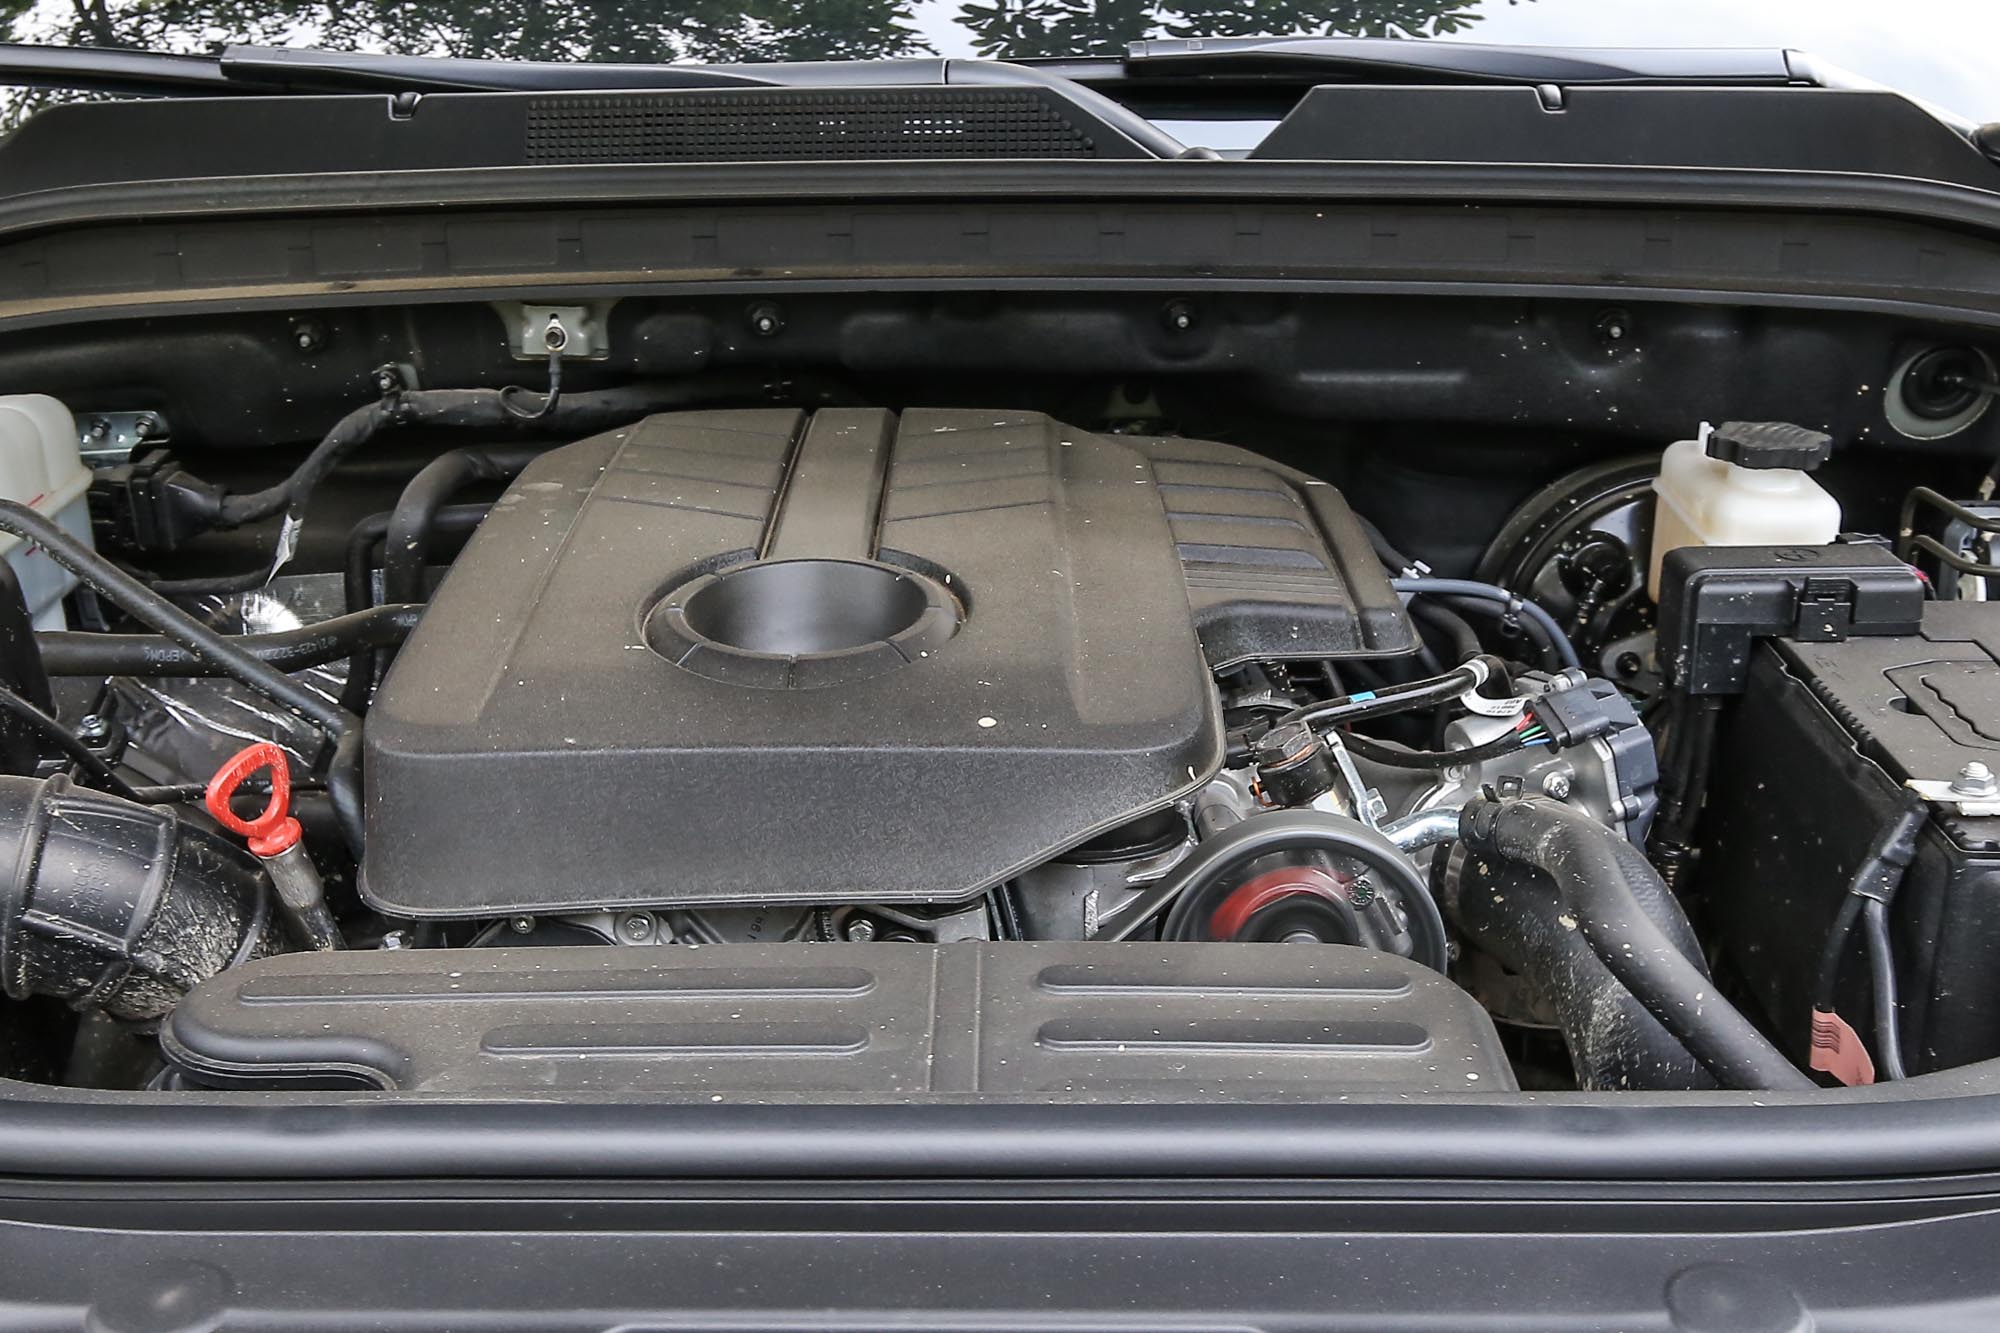 Rexton 搭載 2.2 升直列四缸柴油引擎，具備 181ps/4000rpm最大馬力與 42.8kgm/1600~2600rpm 最大扭力輸出。